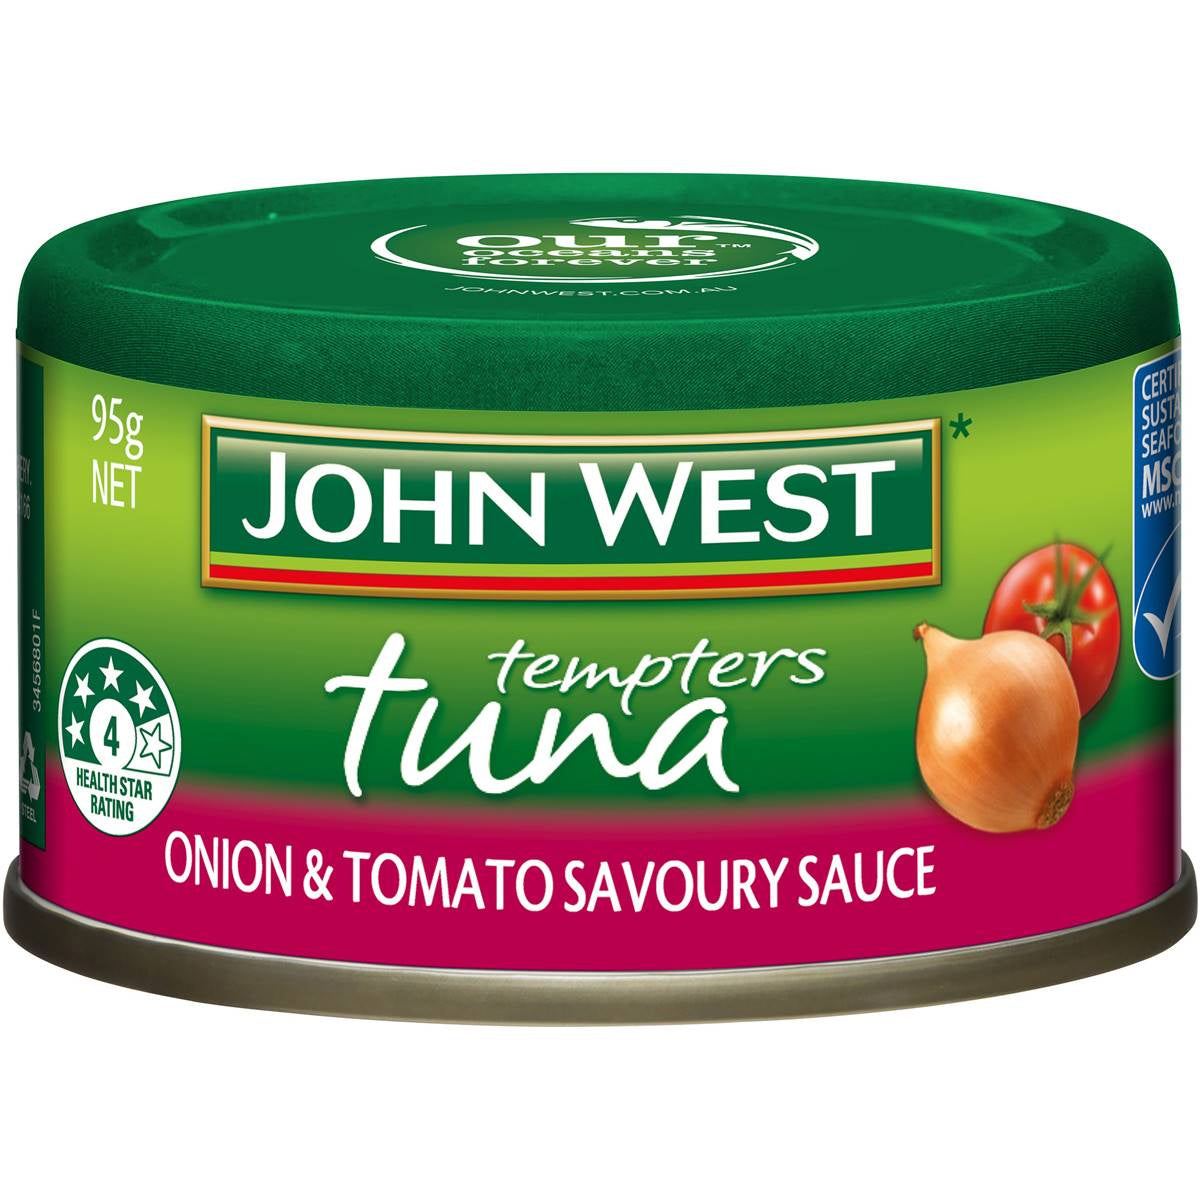 John West Tuna Onion & Tomato Savoury Sauce 95g